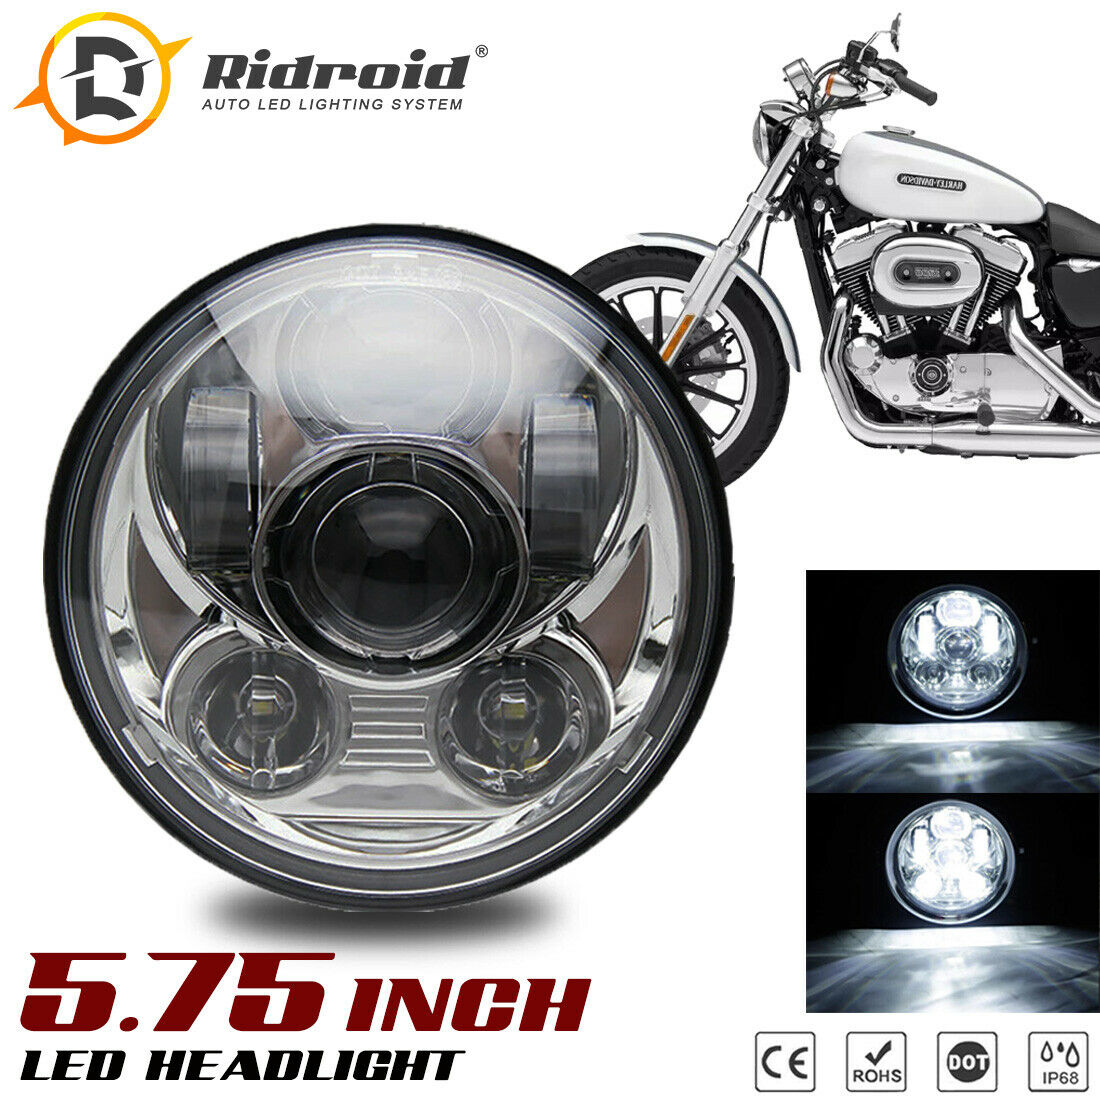 Chrome 5-3/4" 5.75" LED Projector Headlight Motor DRL for Harley Davidson Dyna